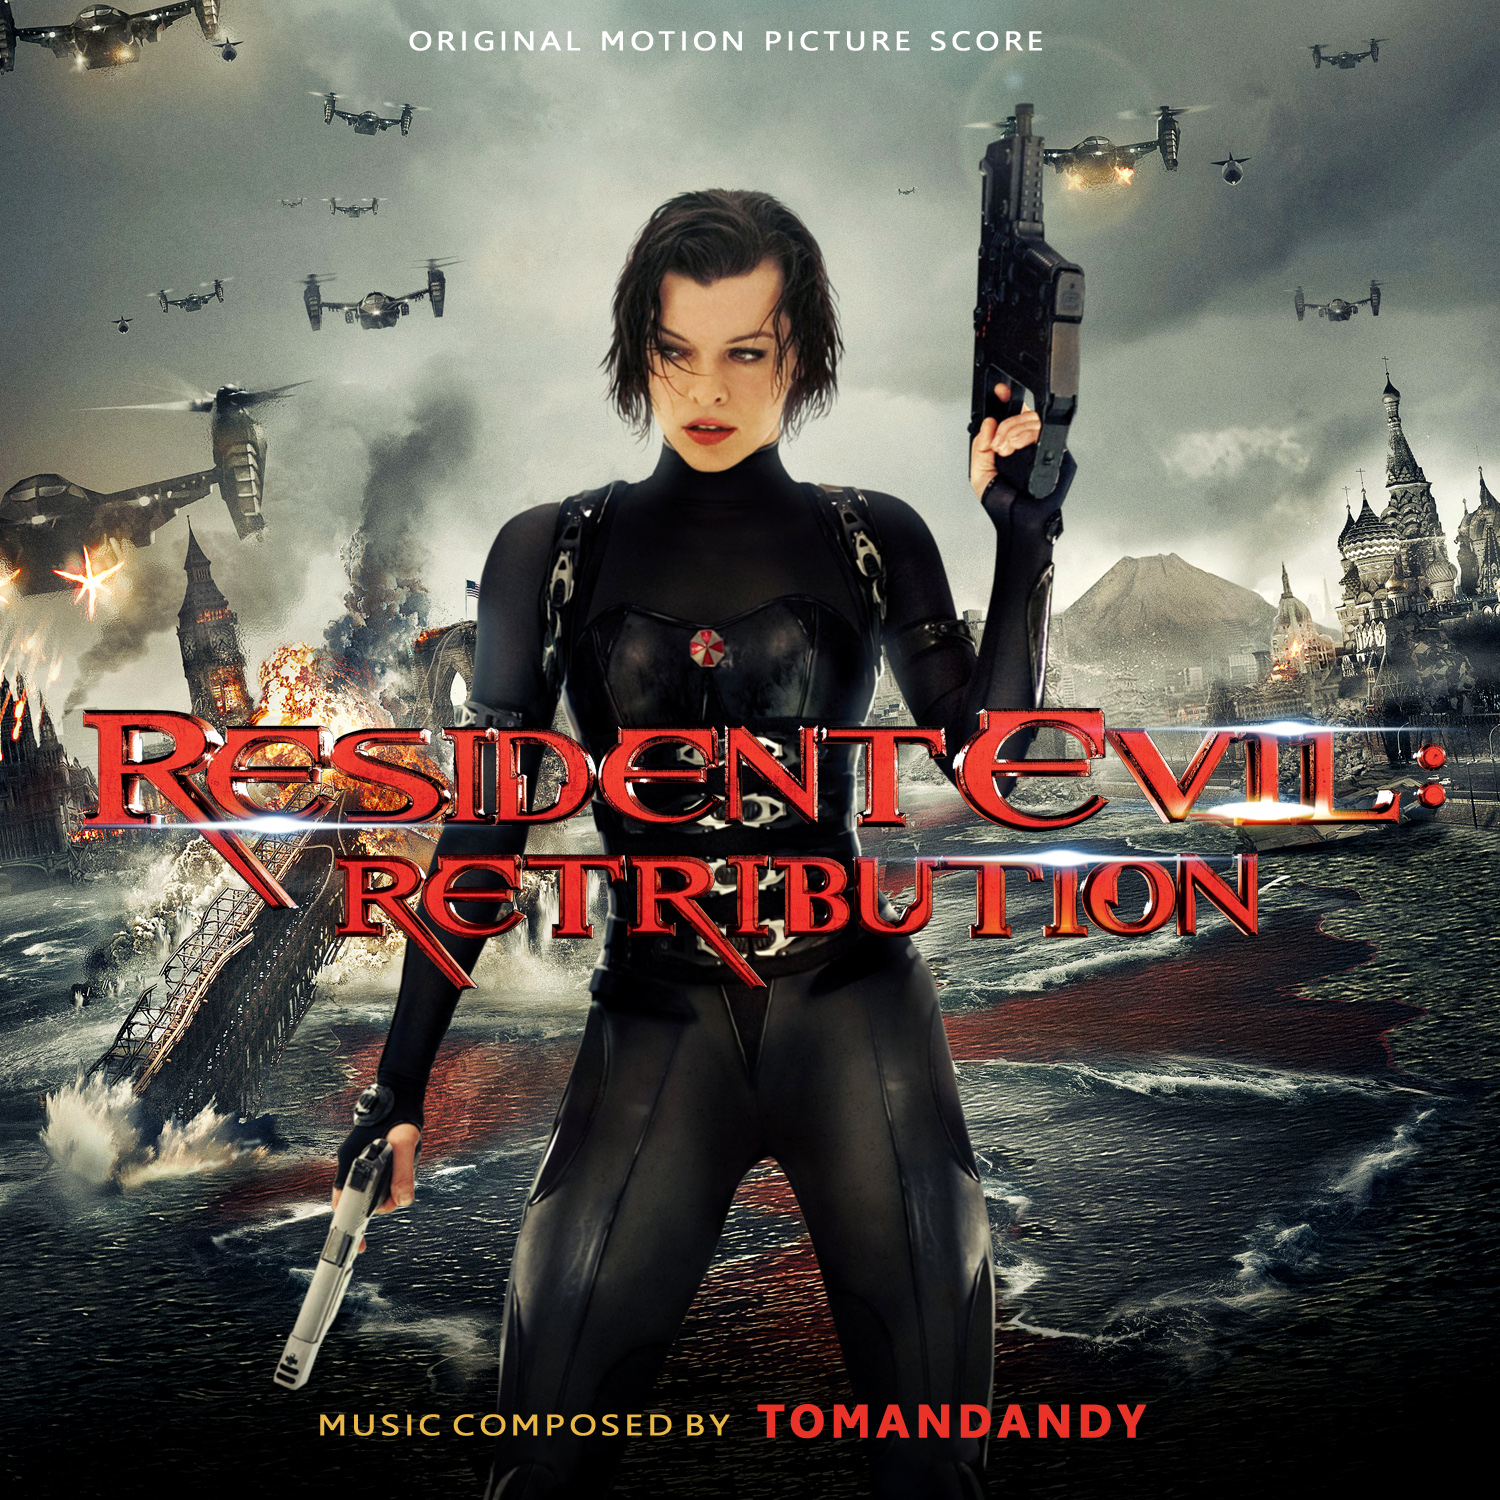 Resident evil саундтреки. Обитель зла. Возмездие Resident Evil. Retribution (2012). Обитель зла Retribution. Обитель зла 5 Возмездие 2012. Обитель зла 5 Tomandandy.